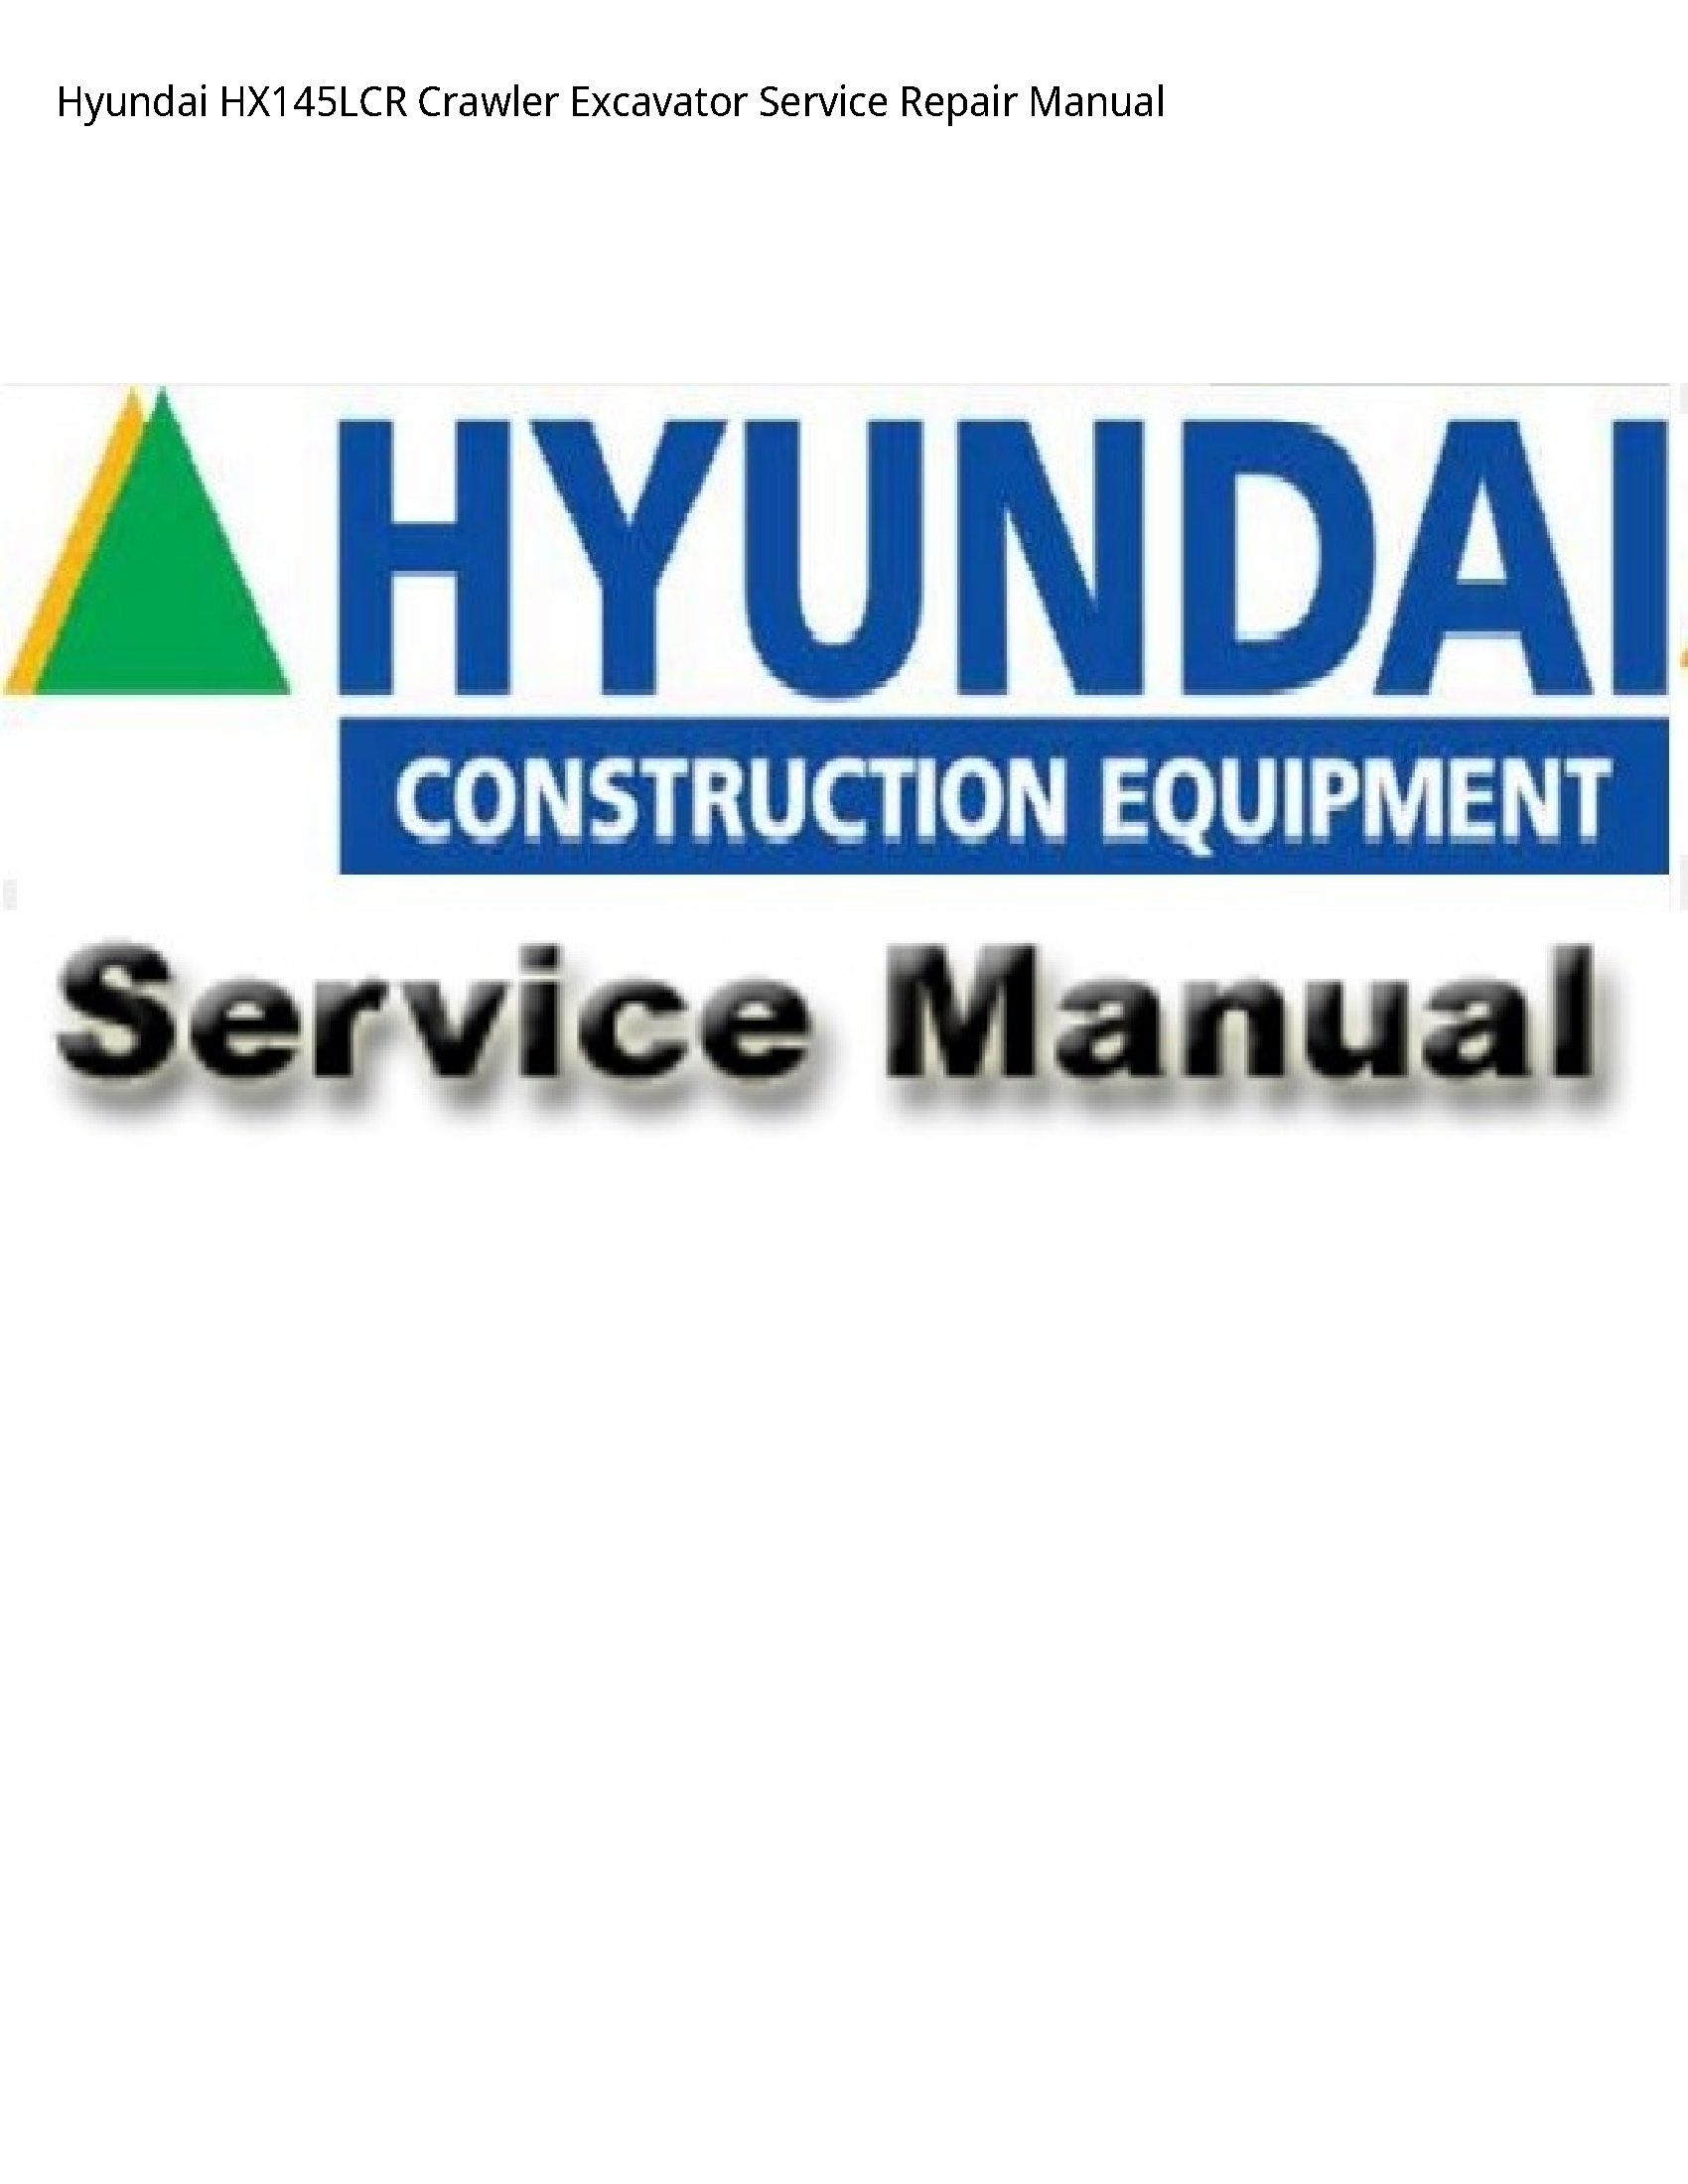 Hyundai HX145LCR Crawler Excavator manual